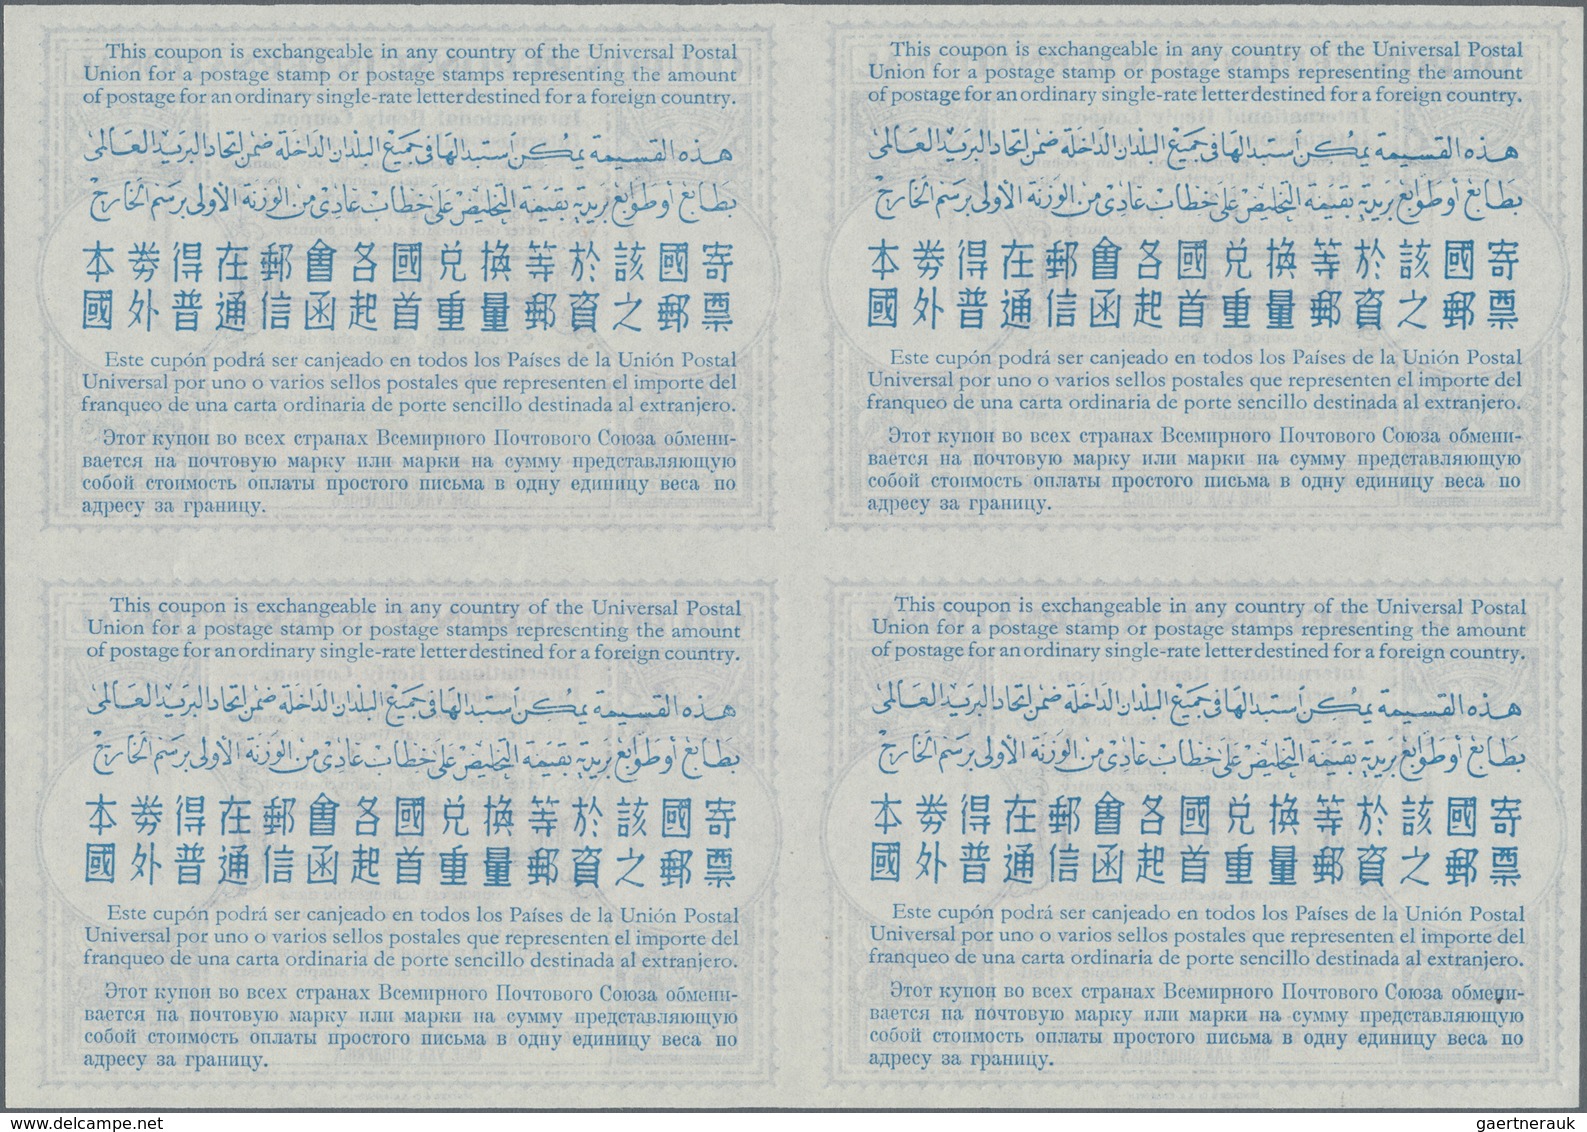 Südafrika: 1948, November. International Reply Coupon 5 D (London Type) In An Unused Block Of 4. Lux - Briefe U. Dokumente